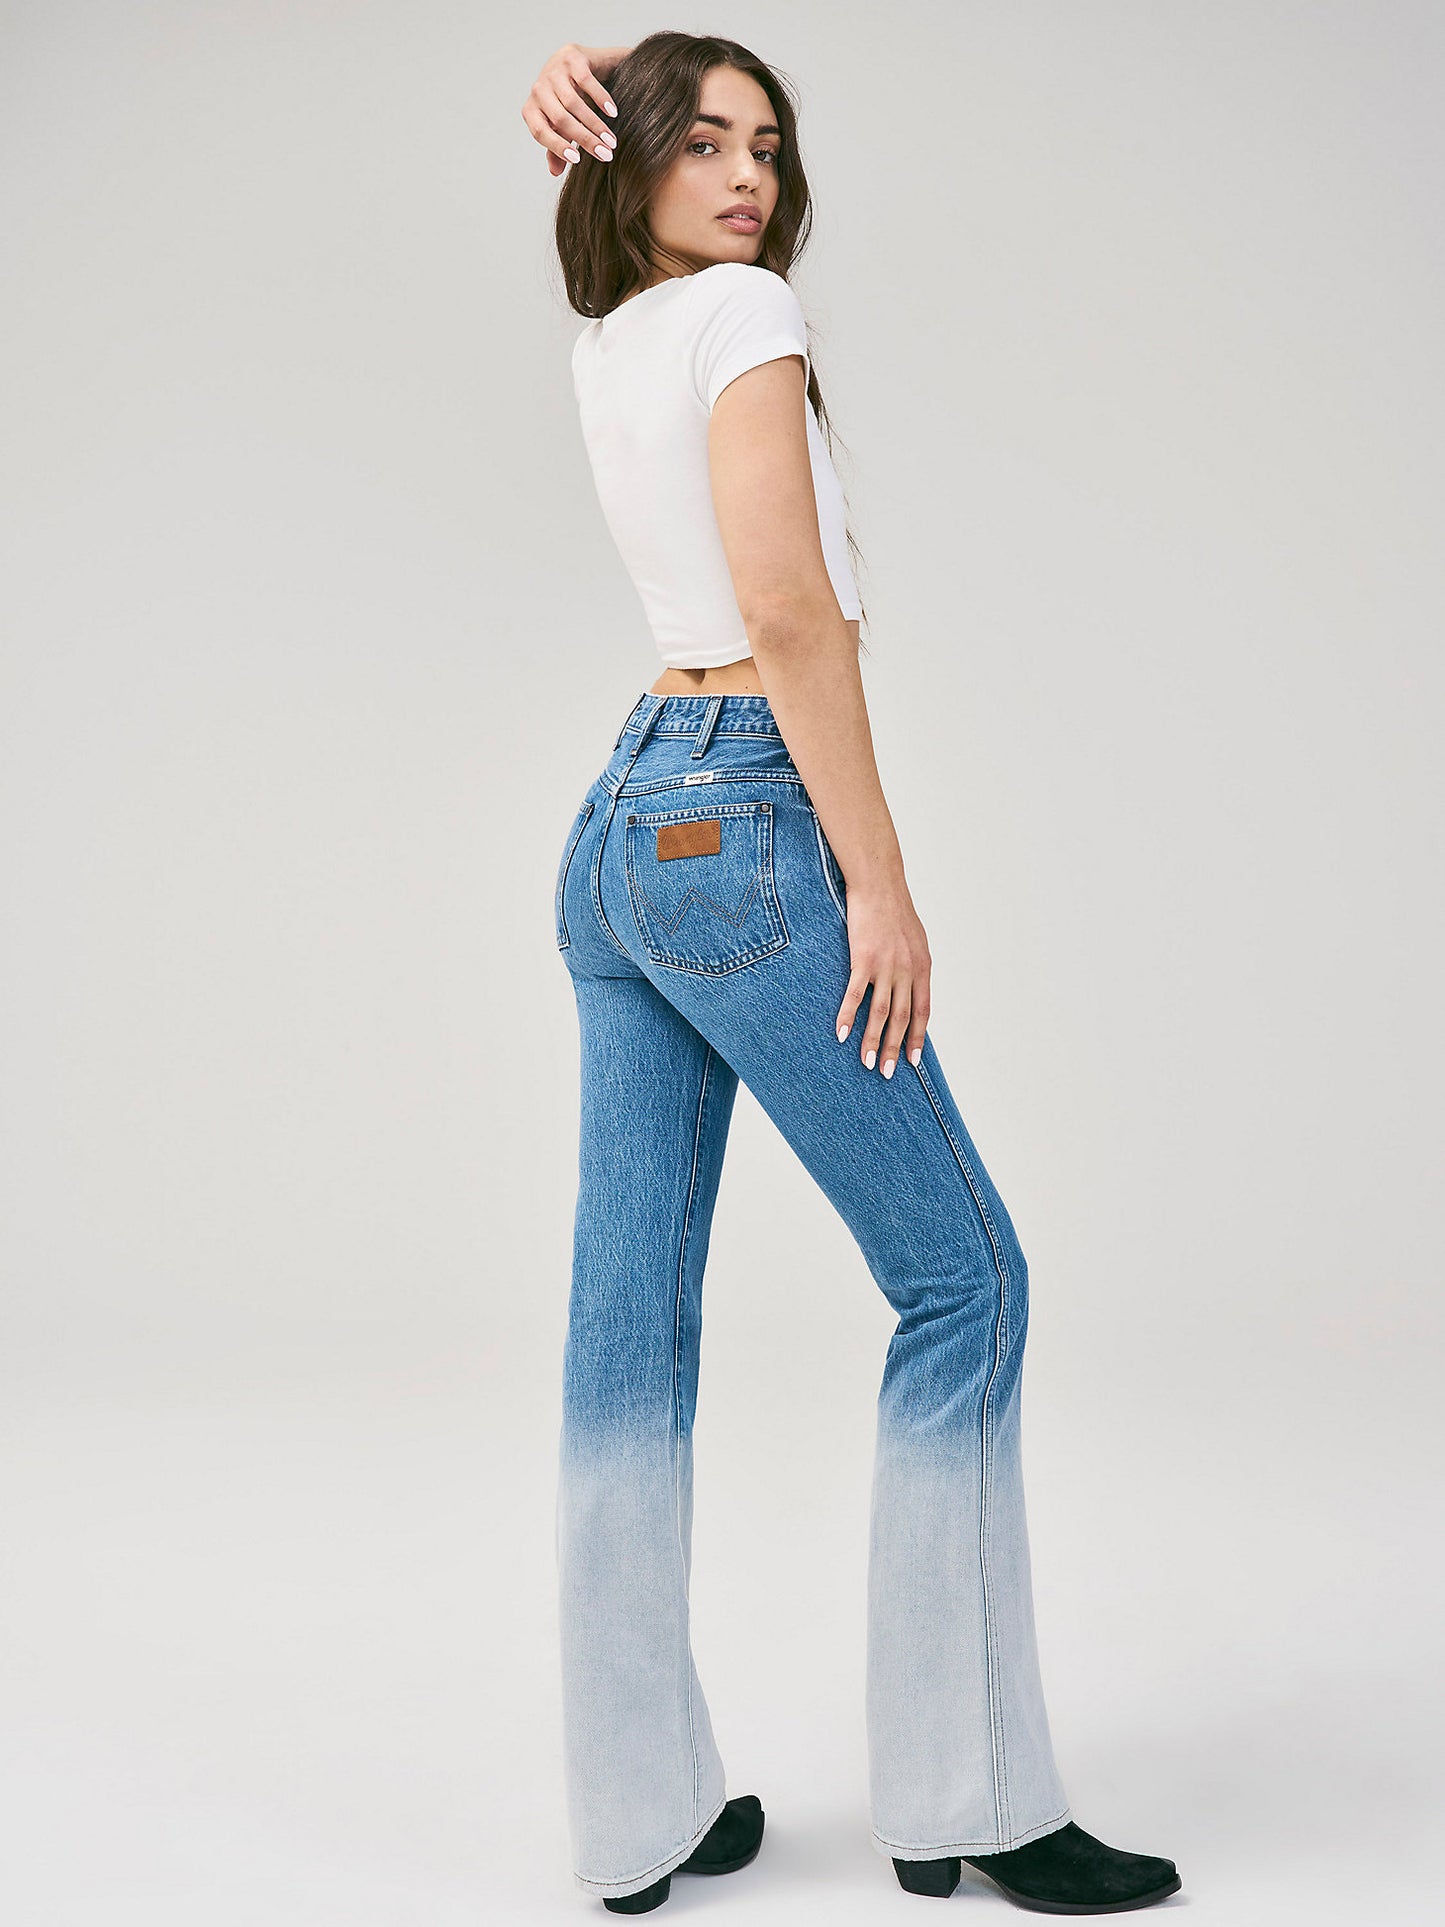 Wrangler Sun Dipped Bootcut Women's Jeans